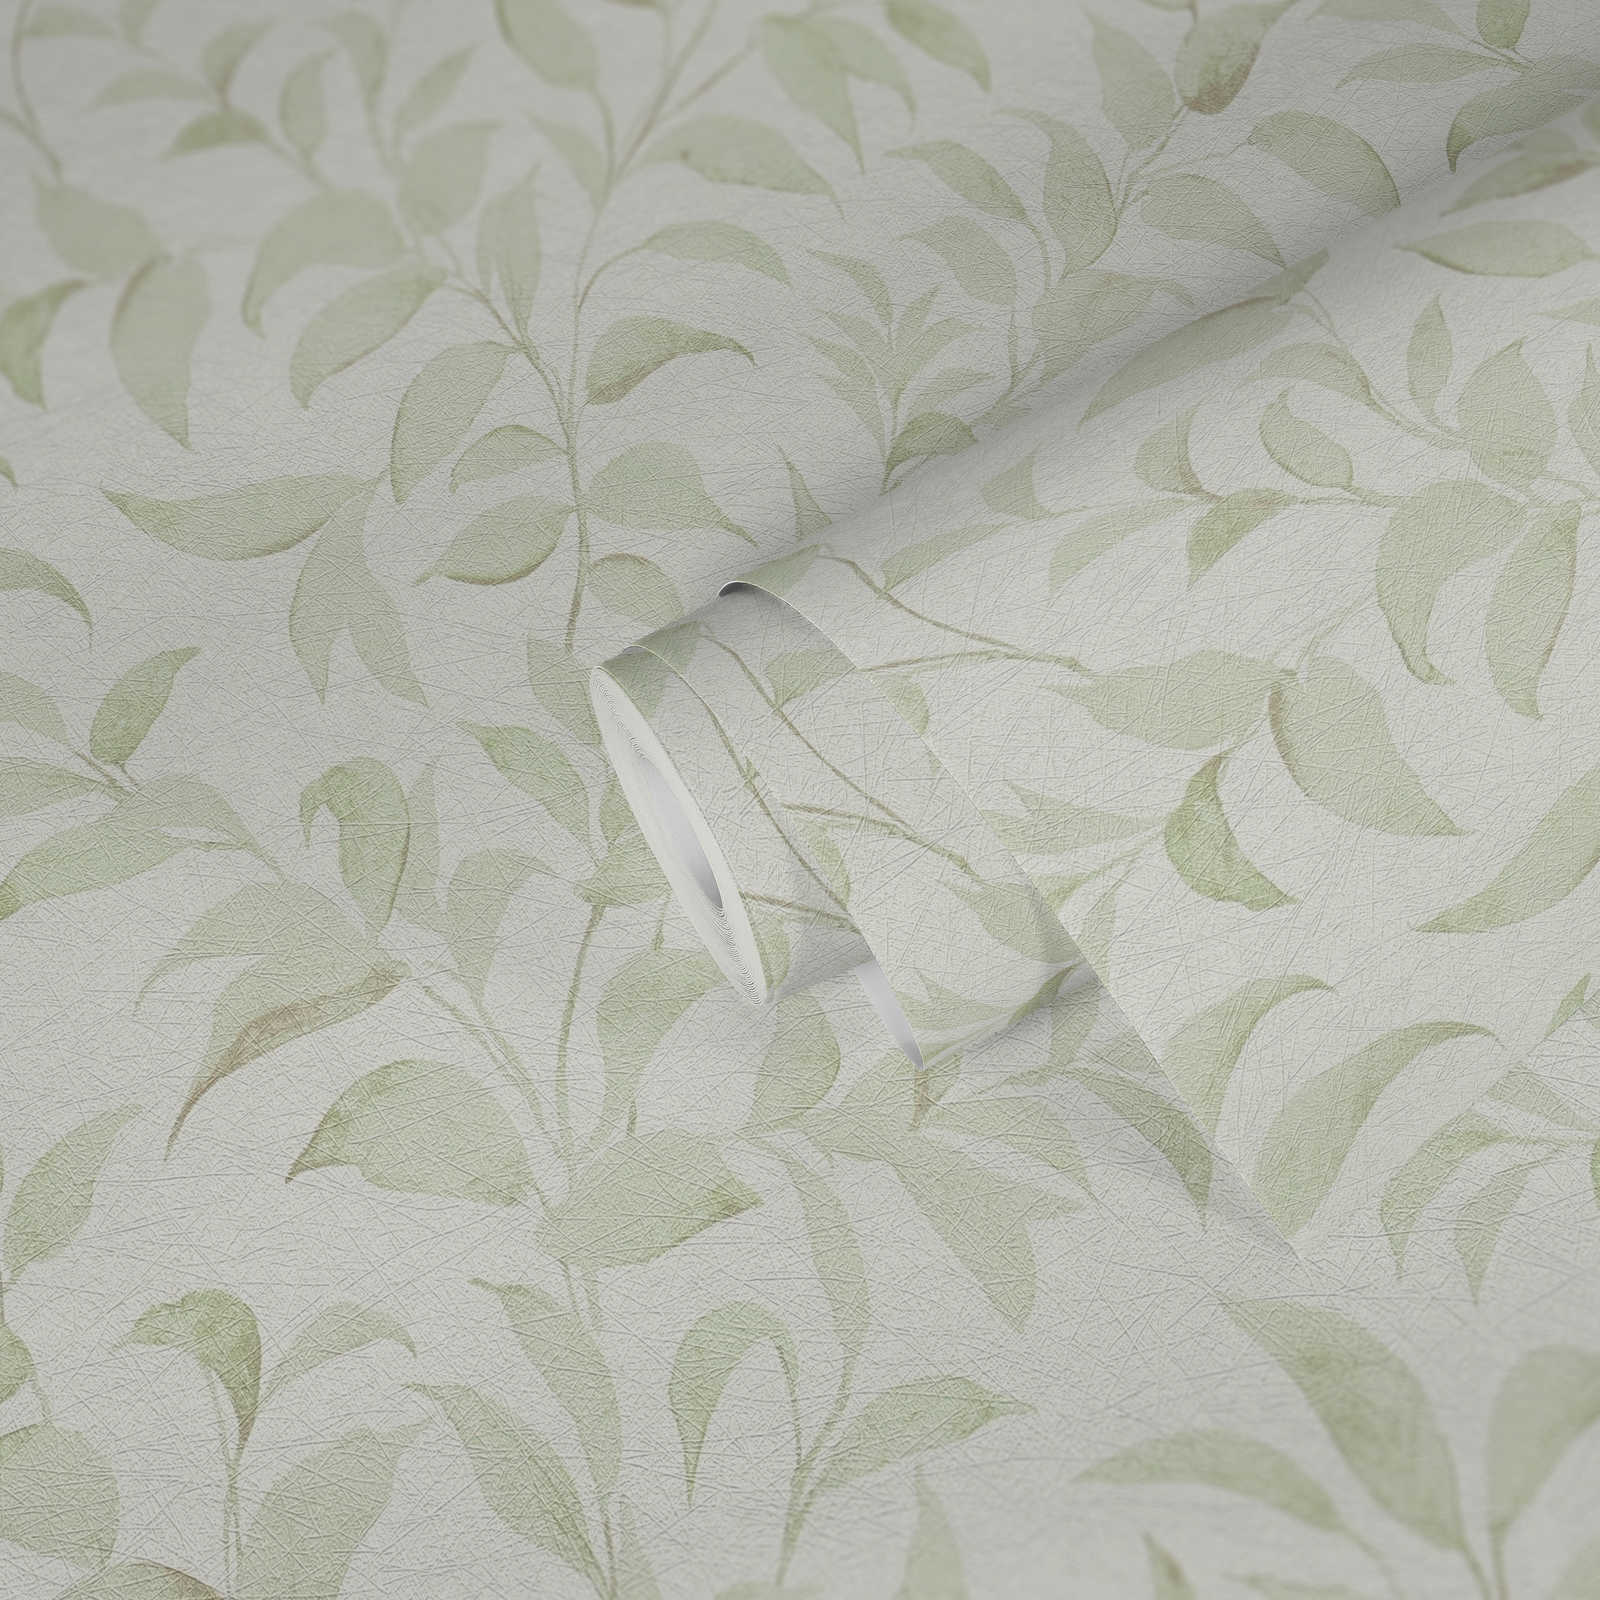             Leaves wallpaper floral shimmer textured - white, green
        